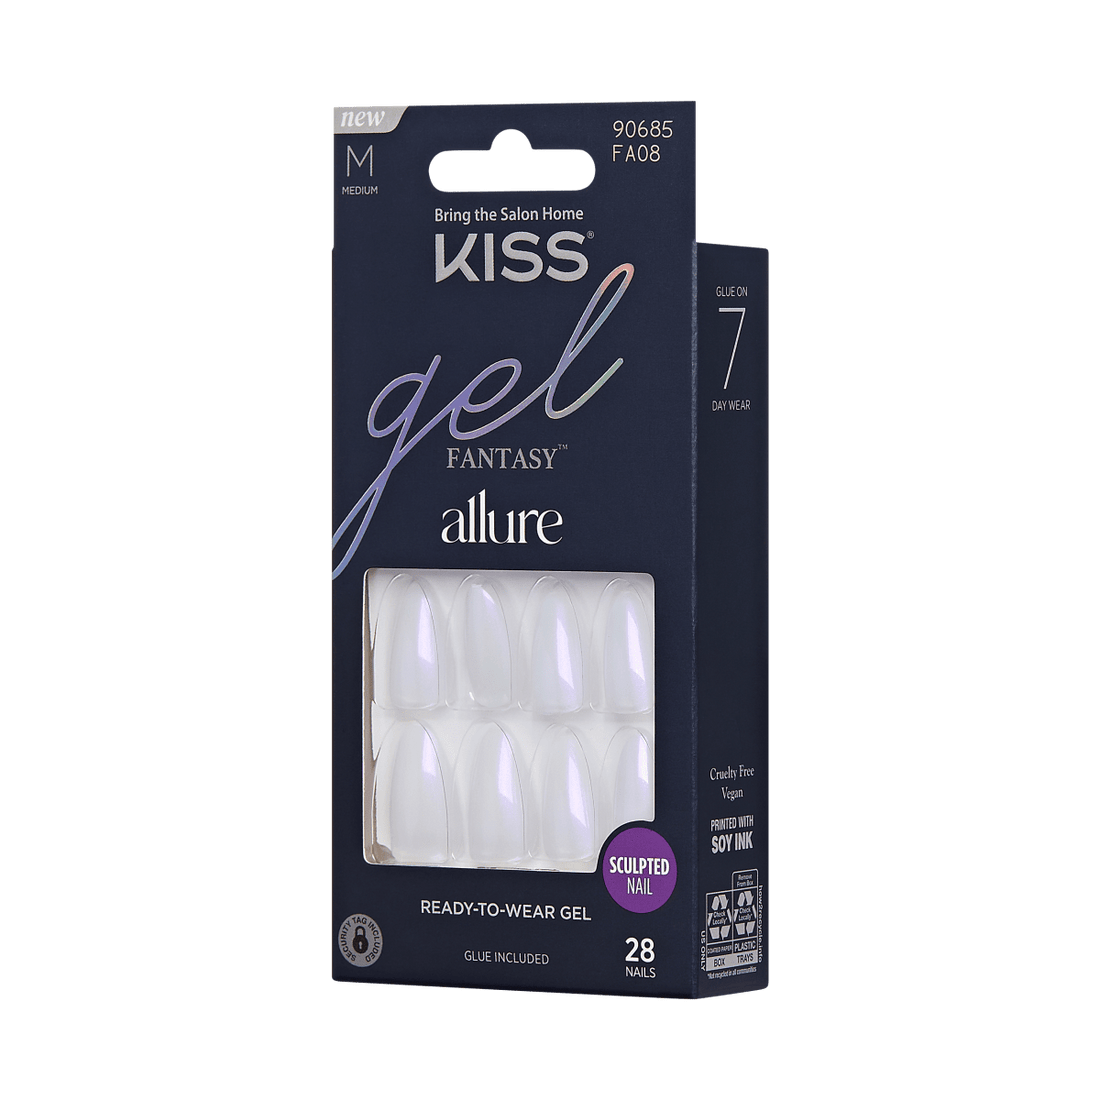 KISS Gel Fantasy Allure Glazed Donut Nails - Influential